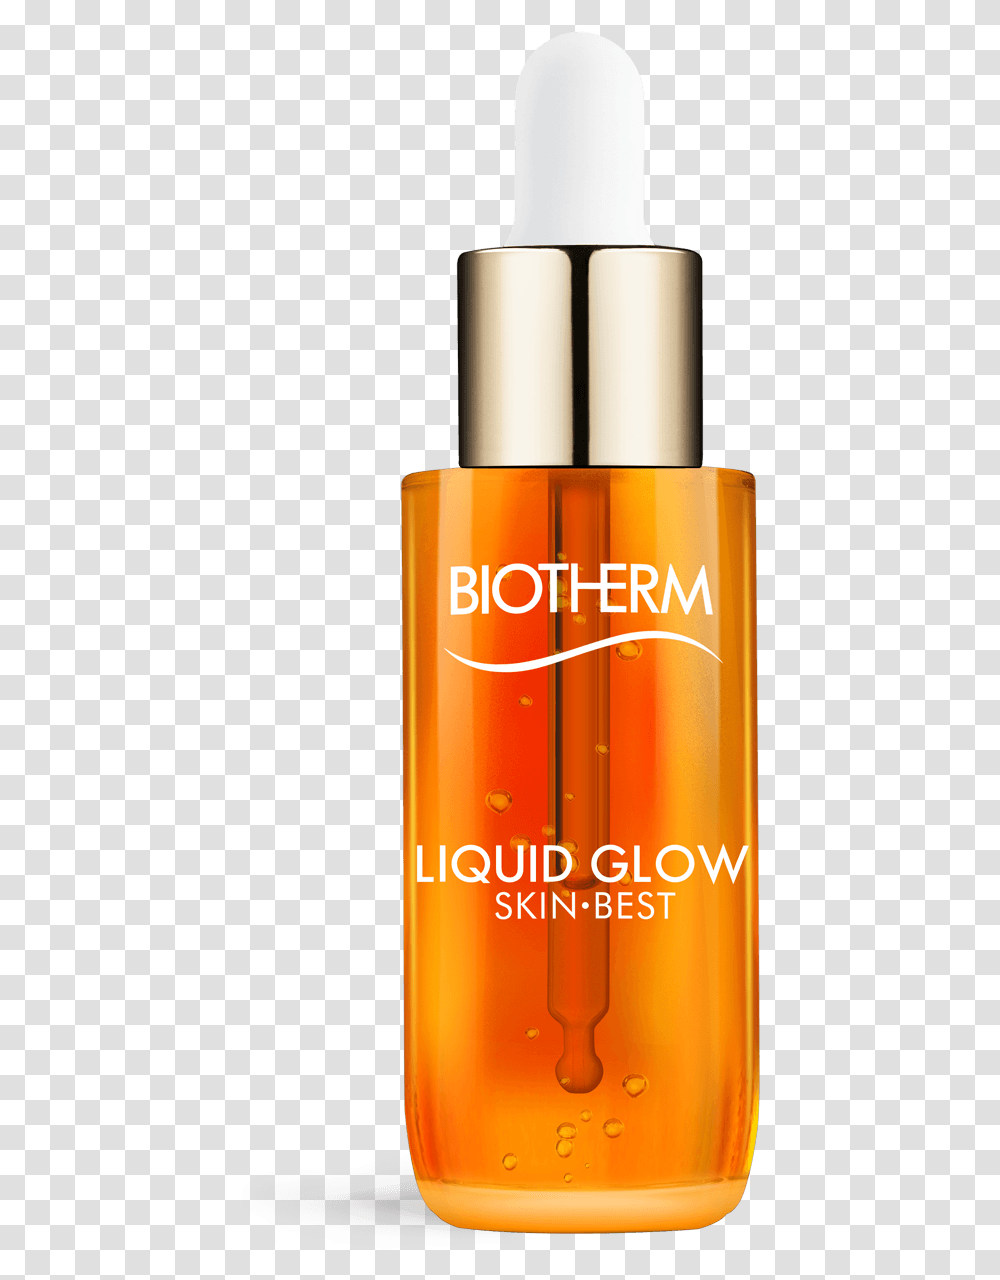 Biotherm Liquid Glow Skin Best, Bottle, Cosmetics, Aluminium, Tin Transparent Png